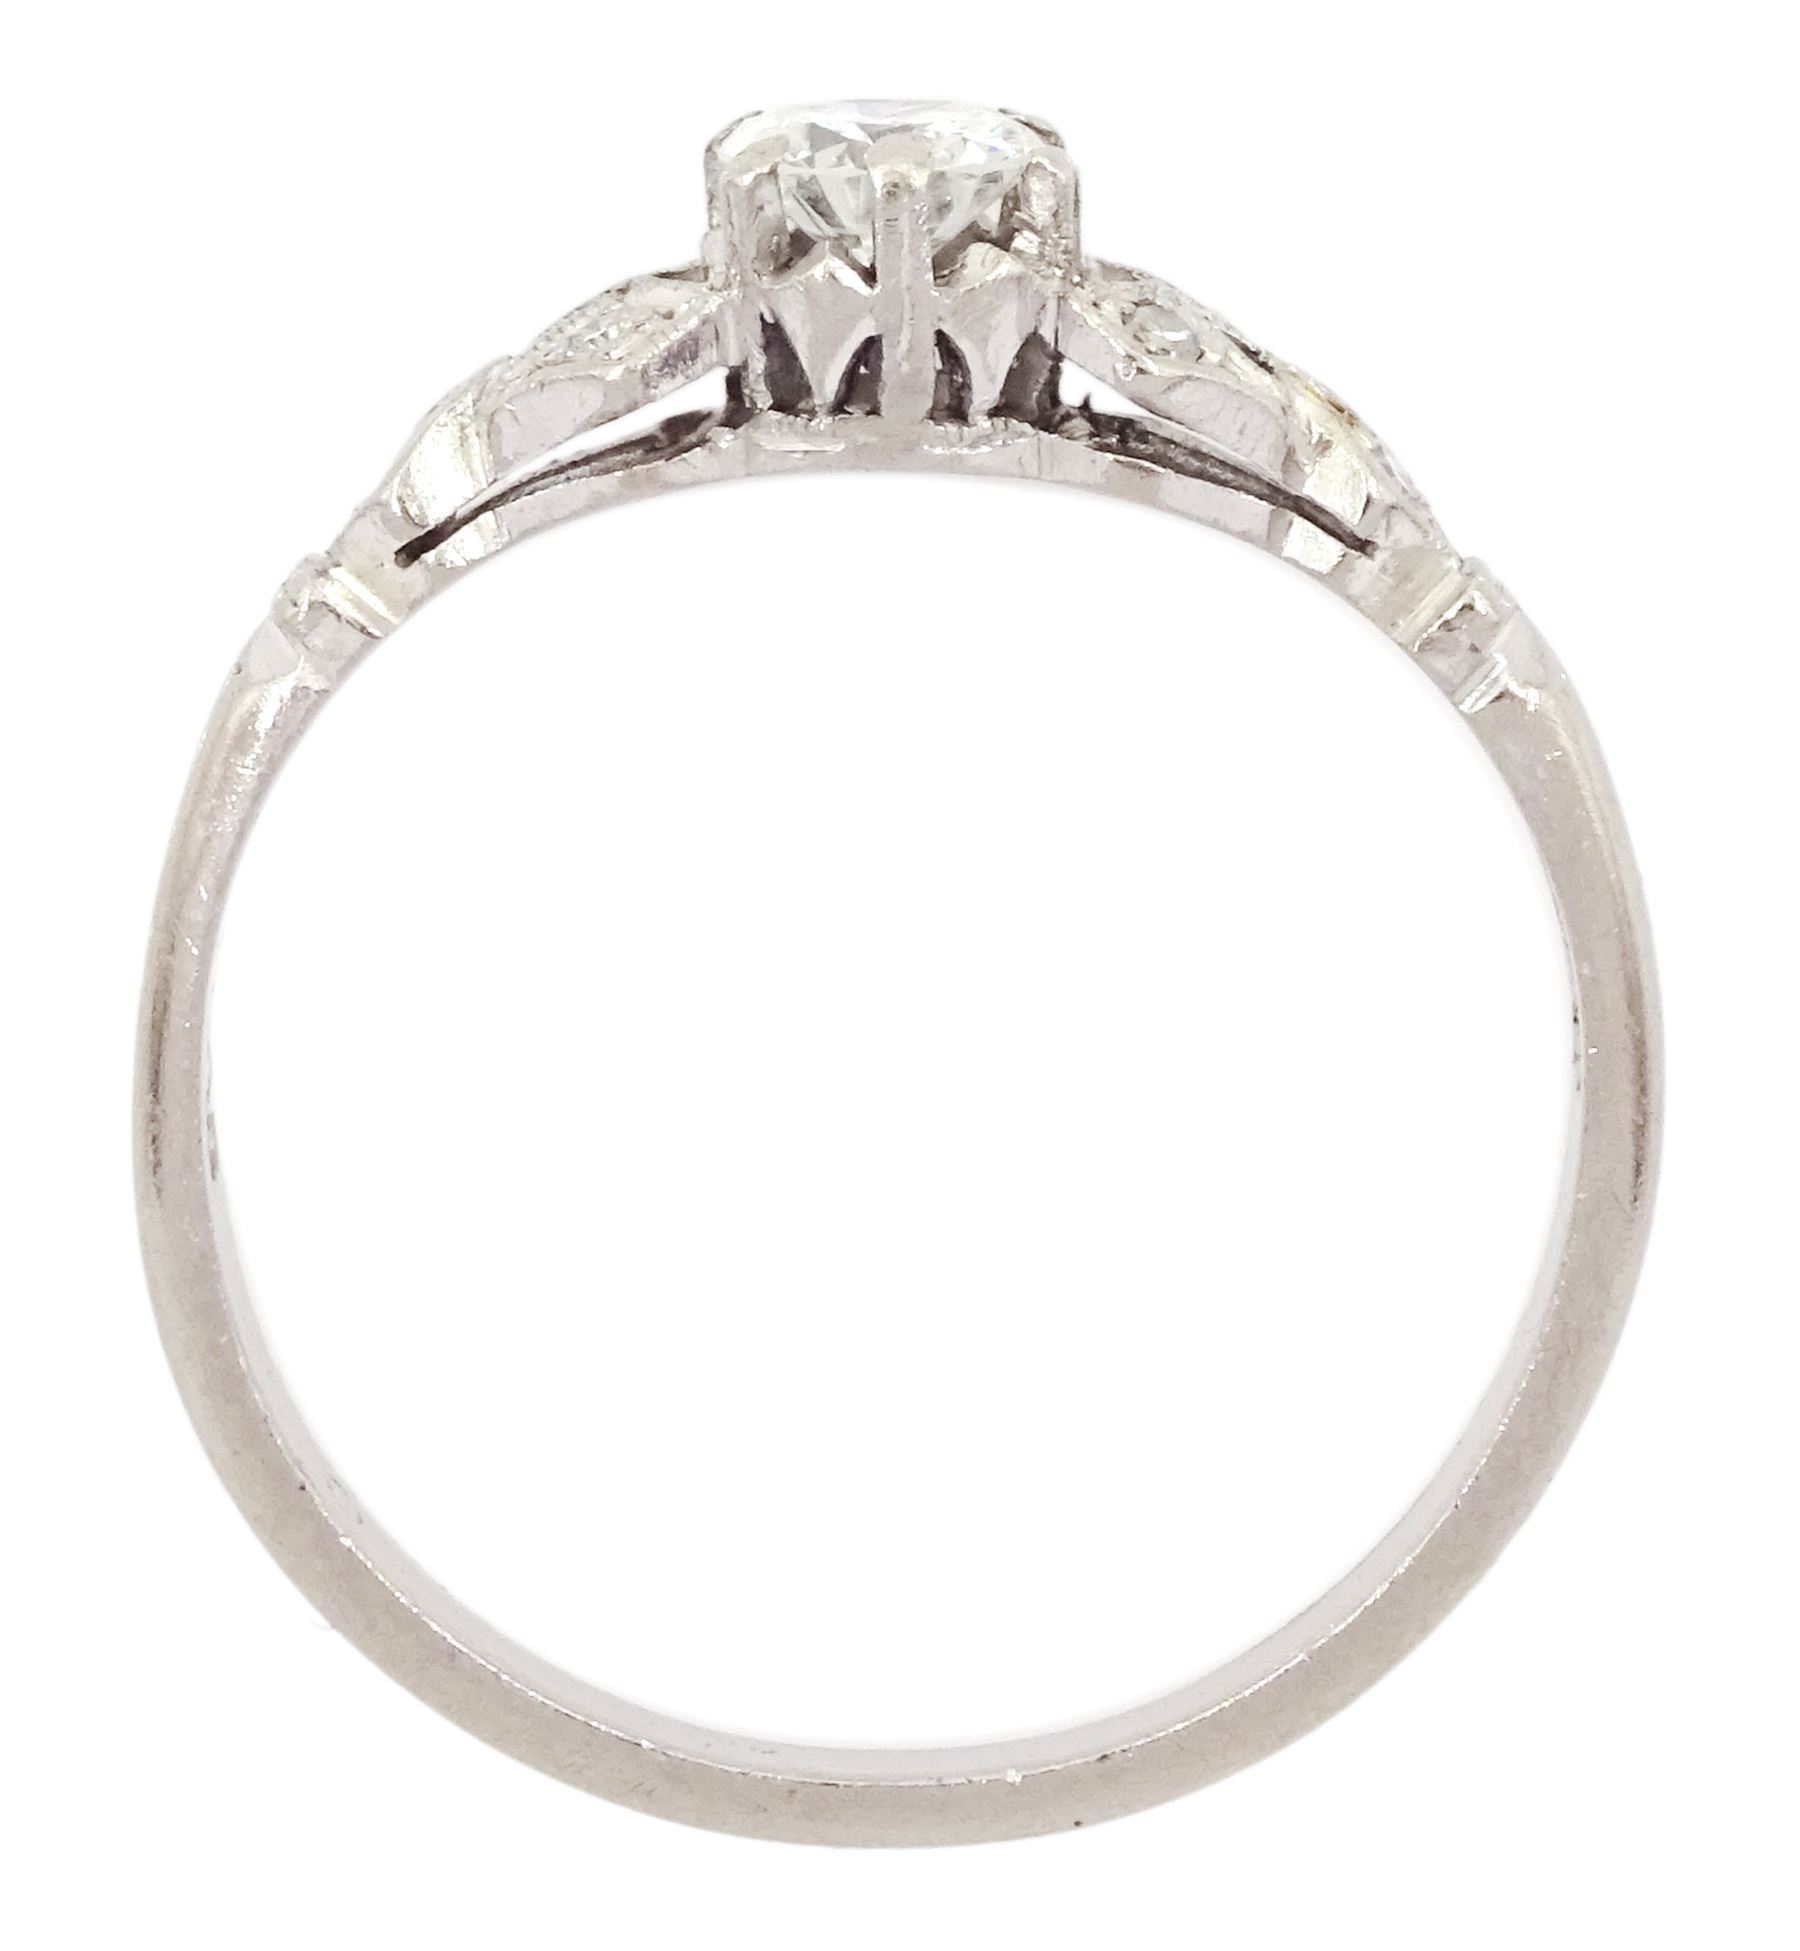 White gold single stone round brilliant cut diamond ring - Image 4 of 4